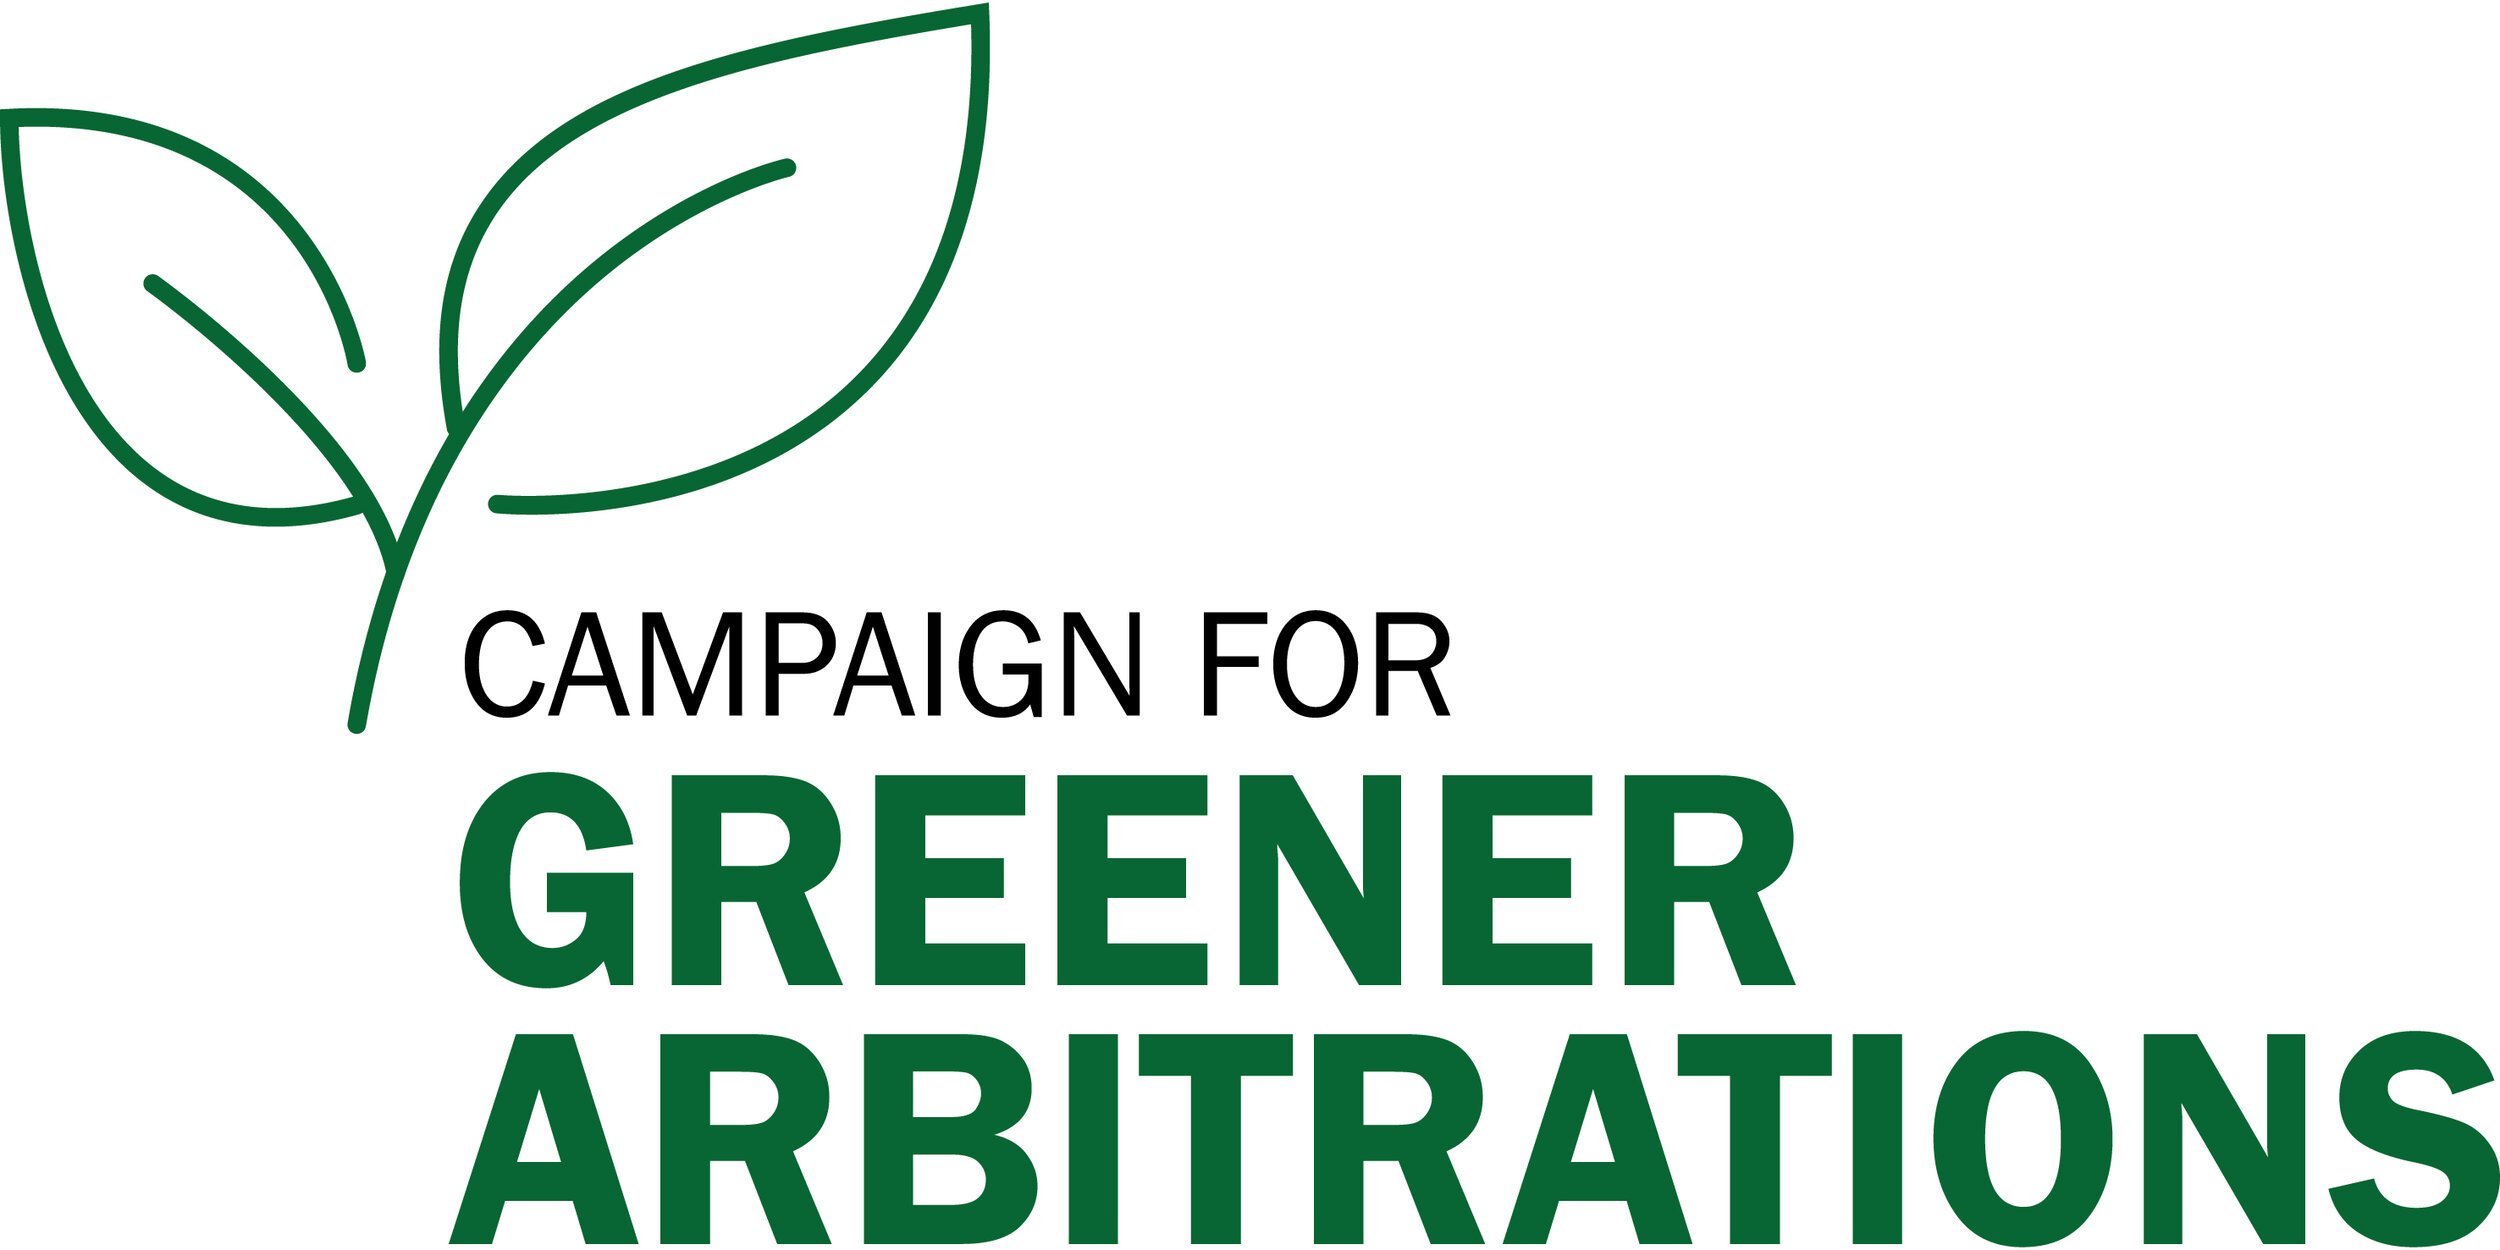 LOGO+Green+Arbitrations+Campaign